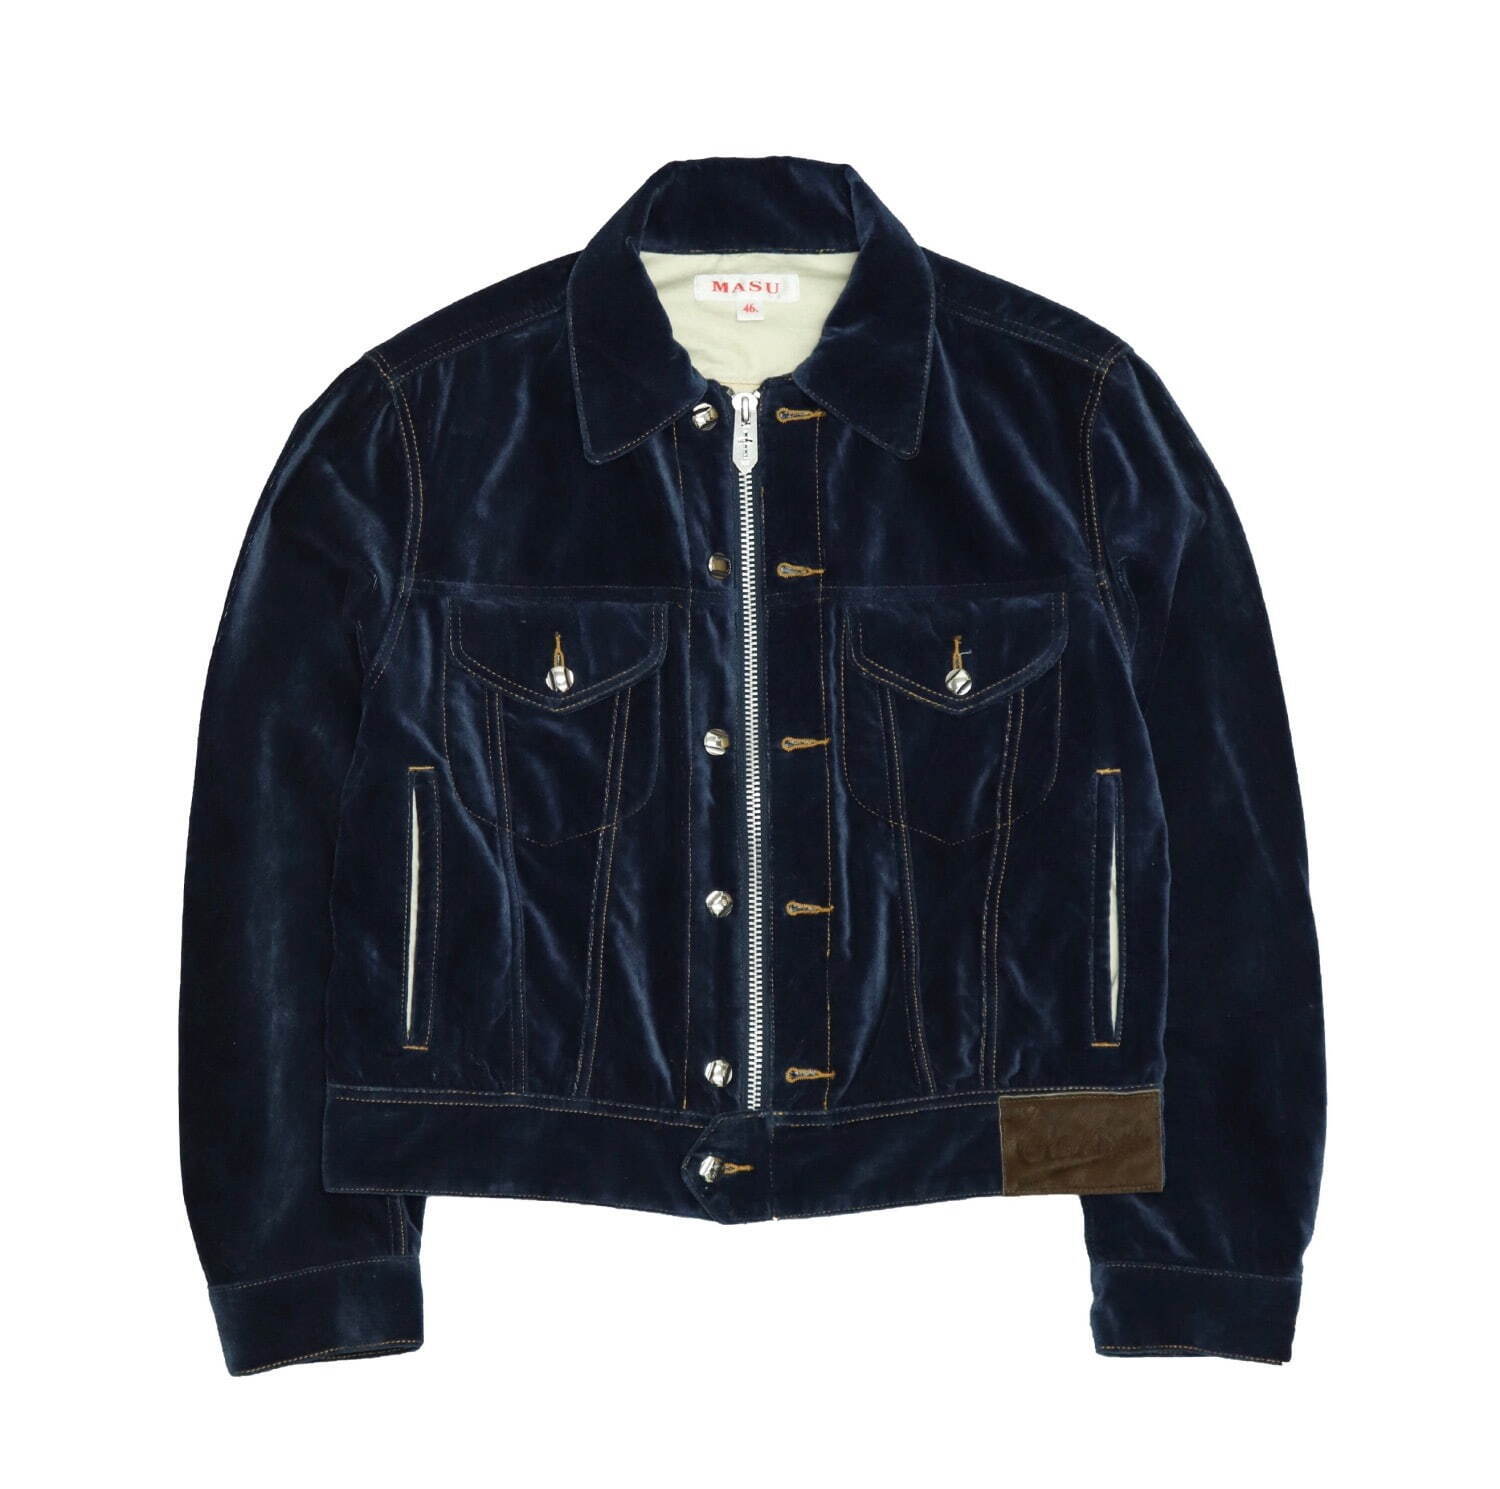 〈M A S U〉indigo velvet trucker jacket 60,500円